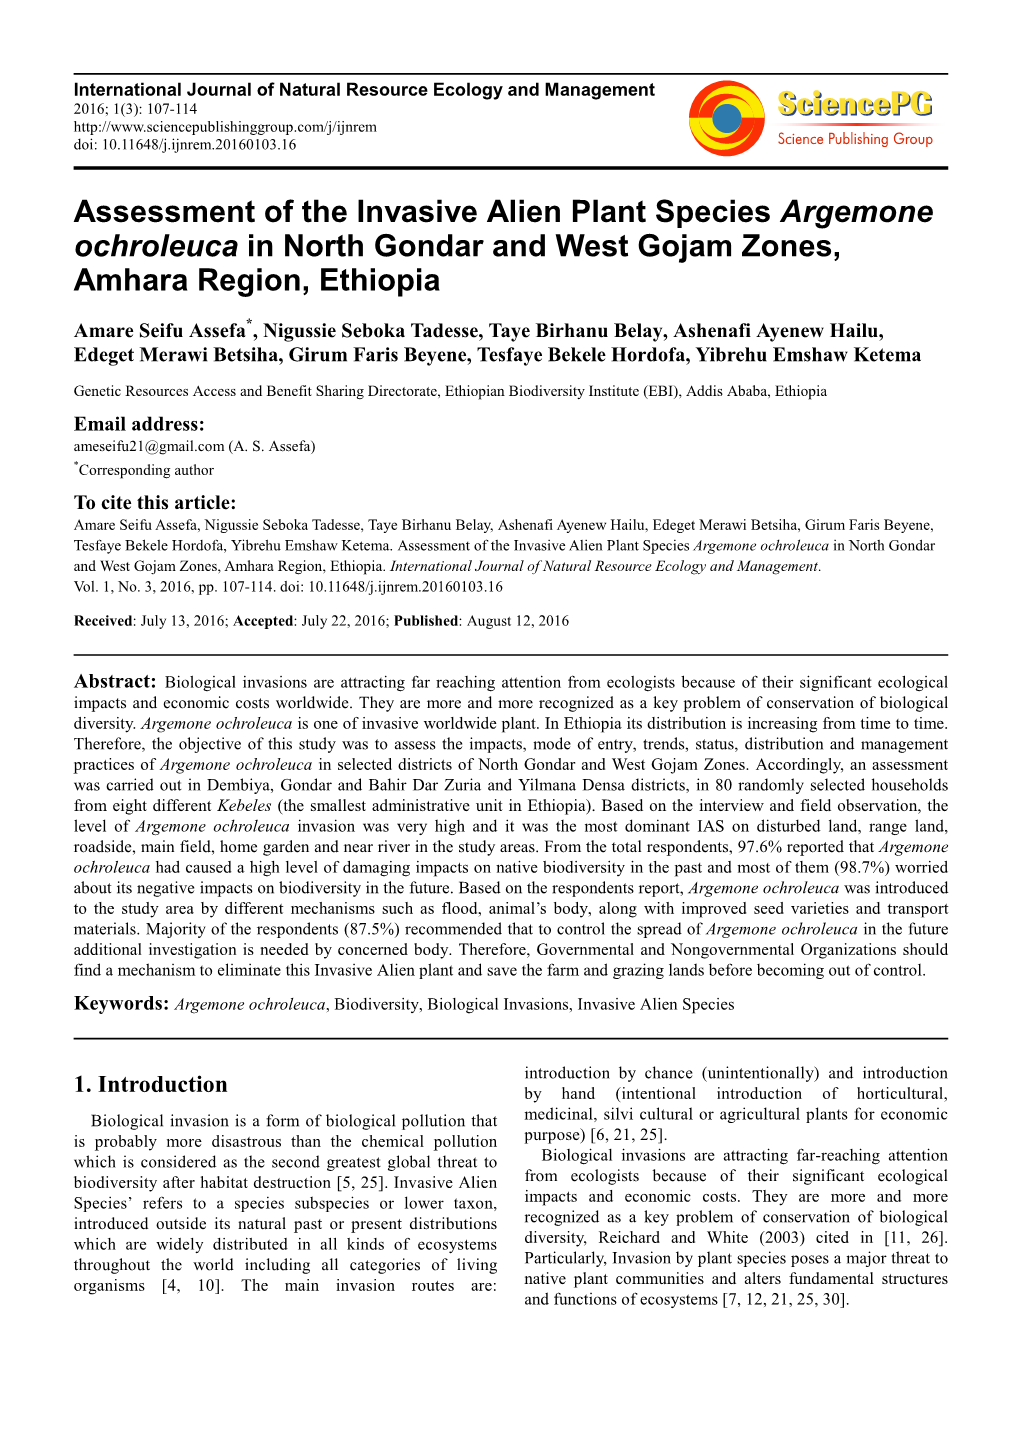 Assessment of the Invasive Alien Plant Species Argemone Ochroleuca in North Gondar and West Gojam Zones, Amhara Region, Ethiopia